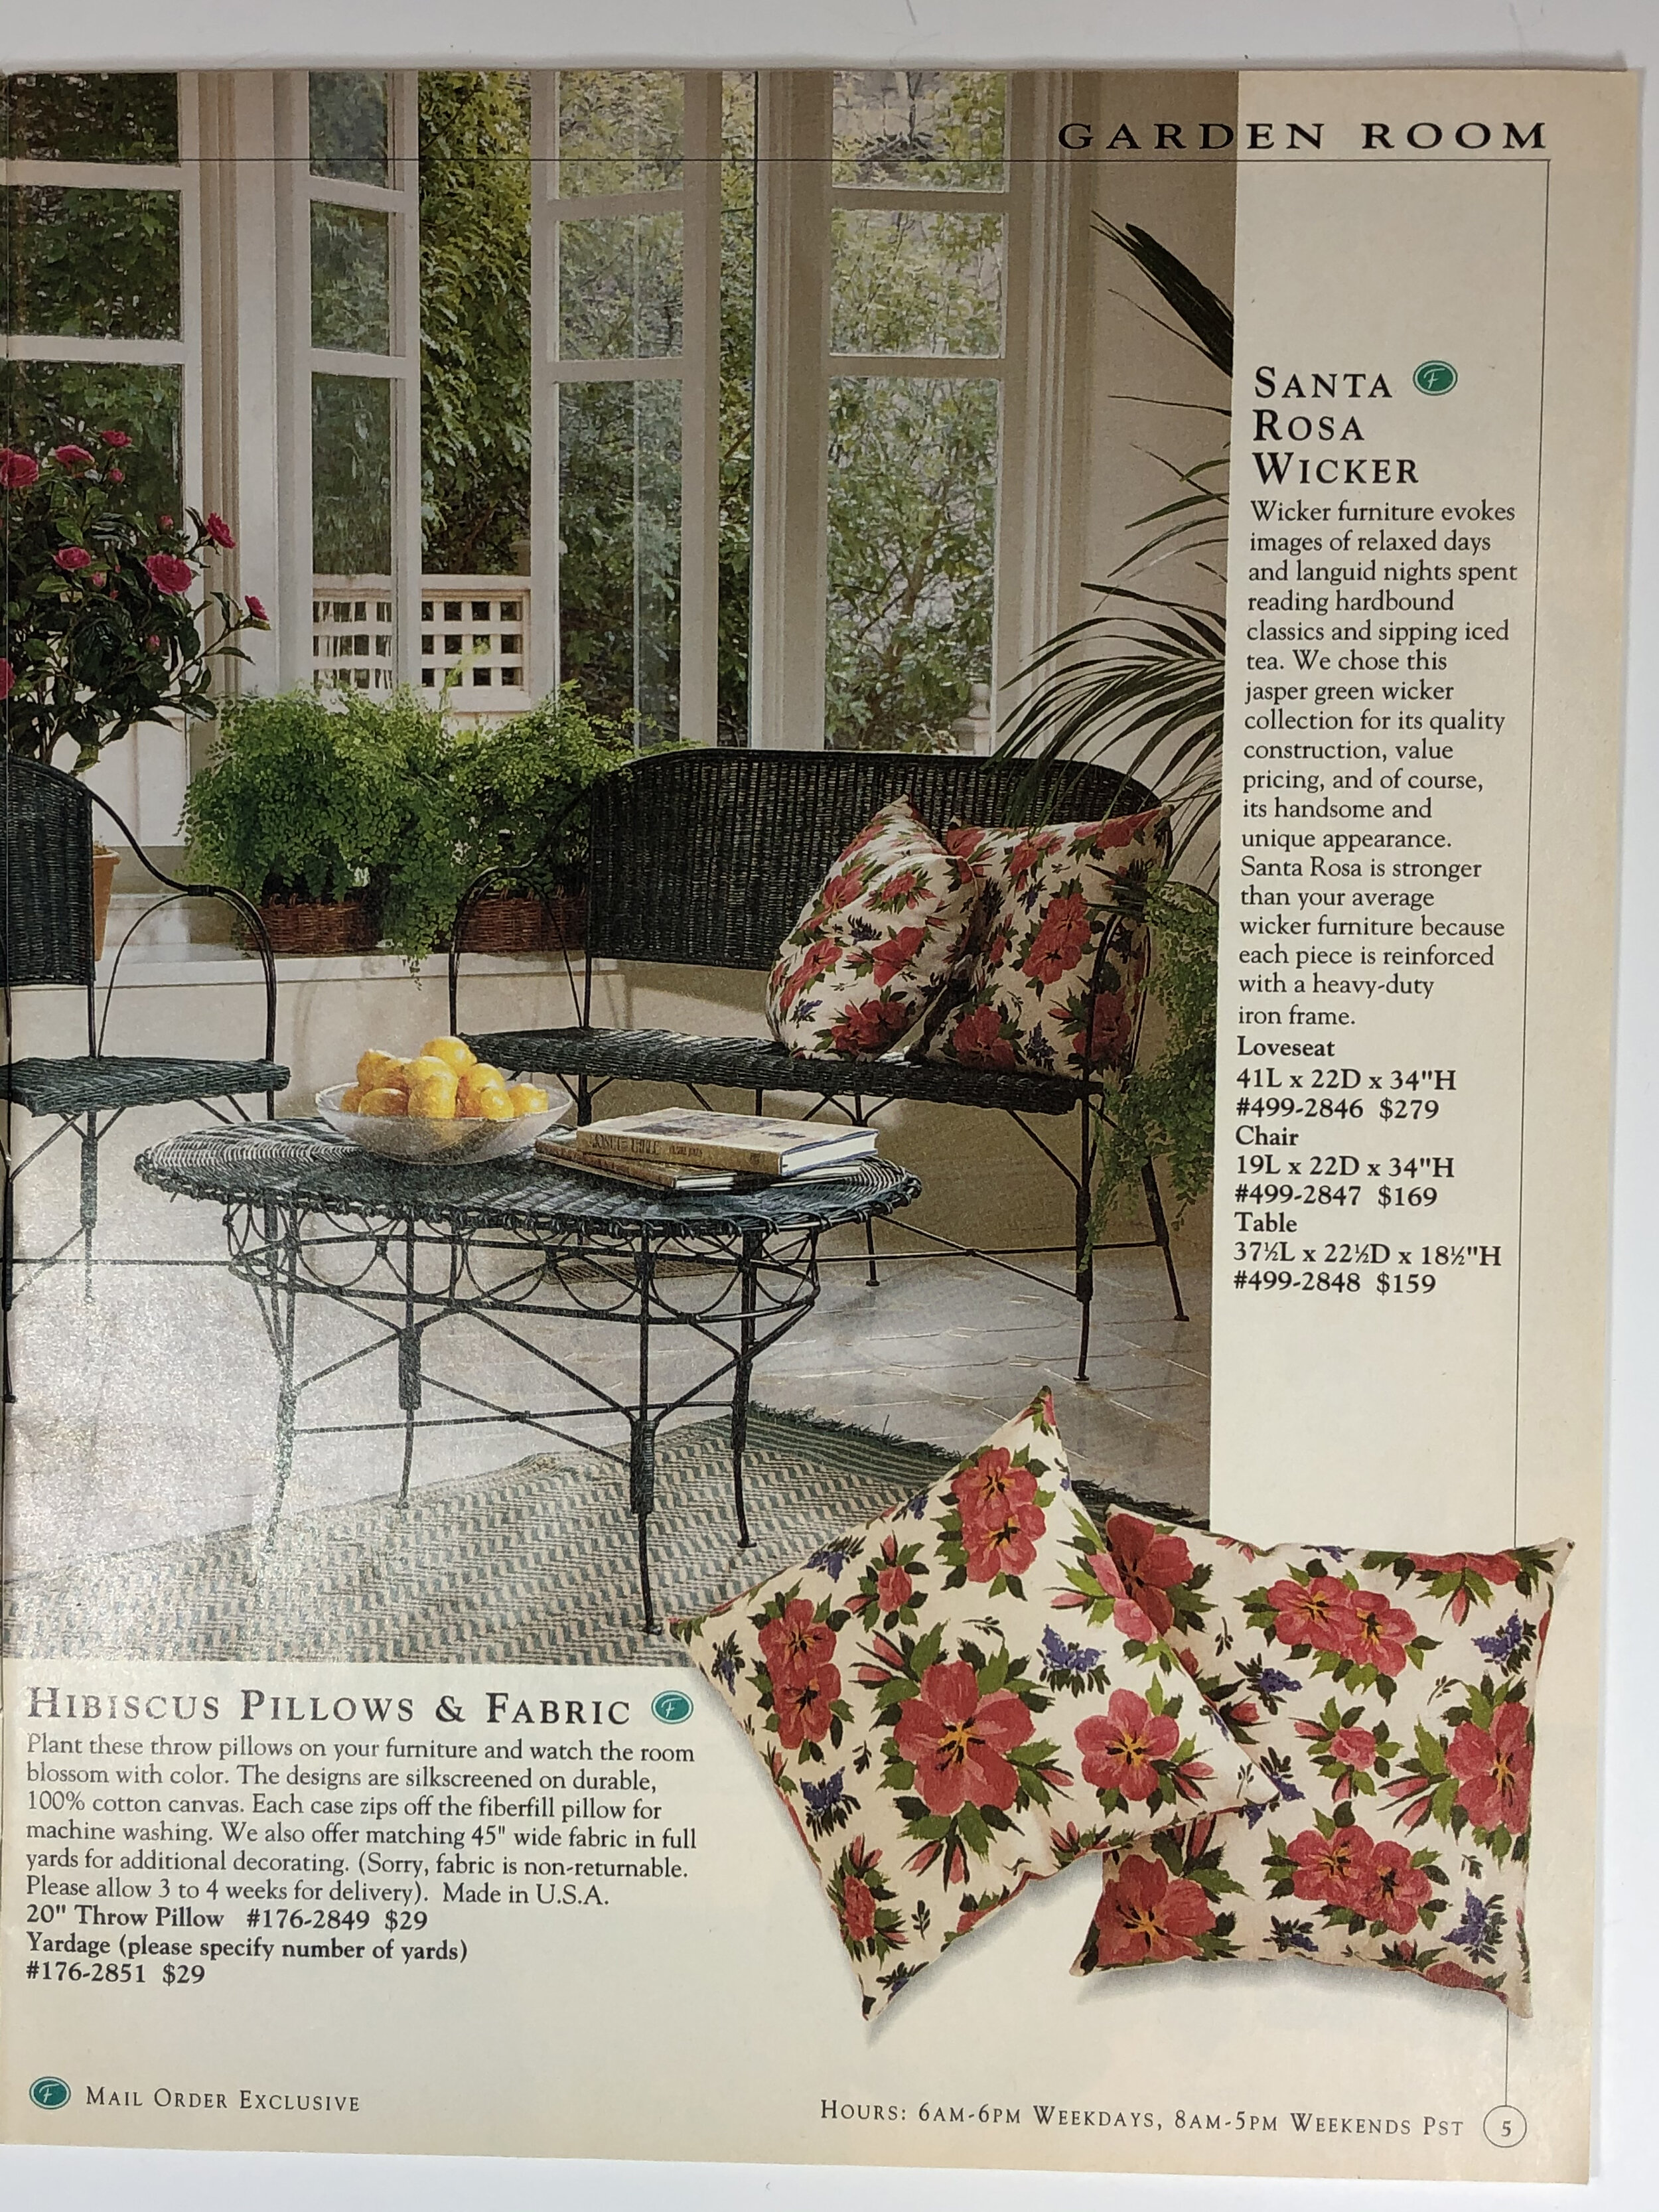 Hibiscus pillows in catalog.jpg